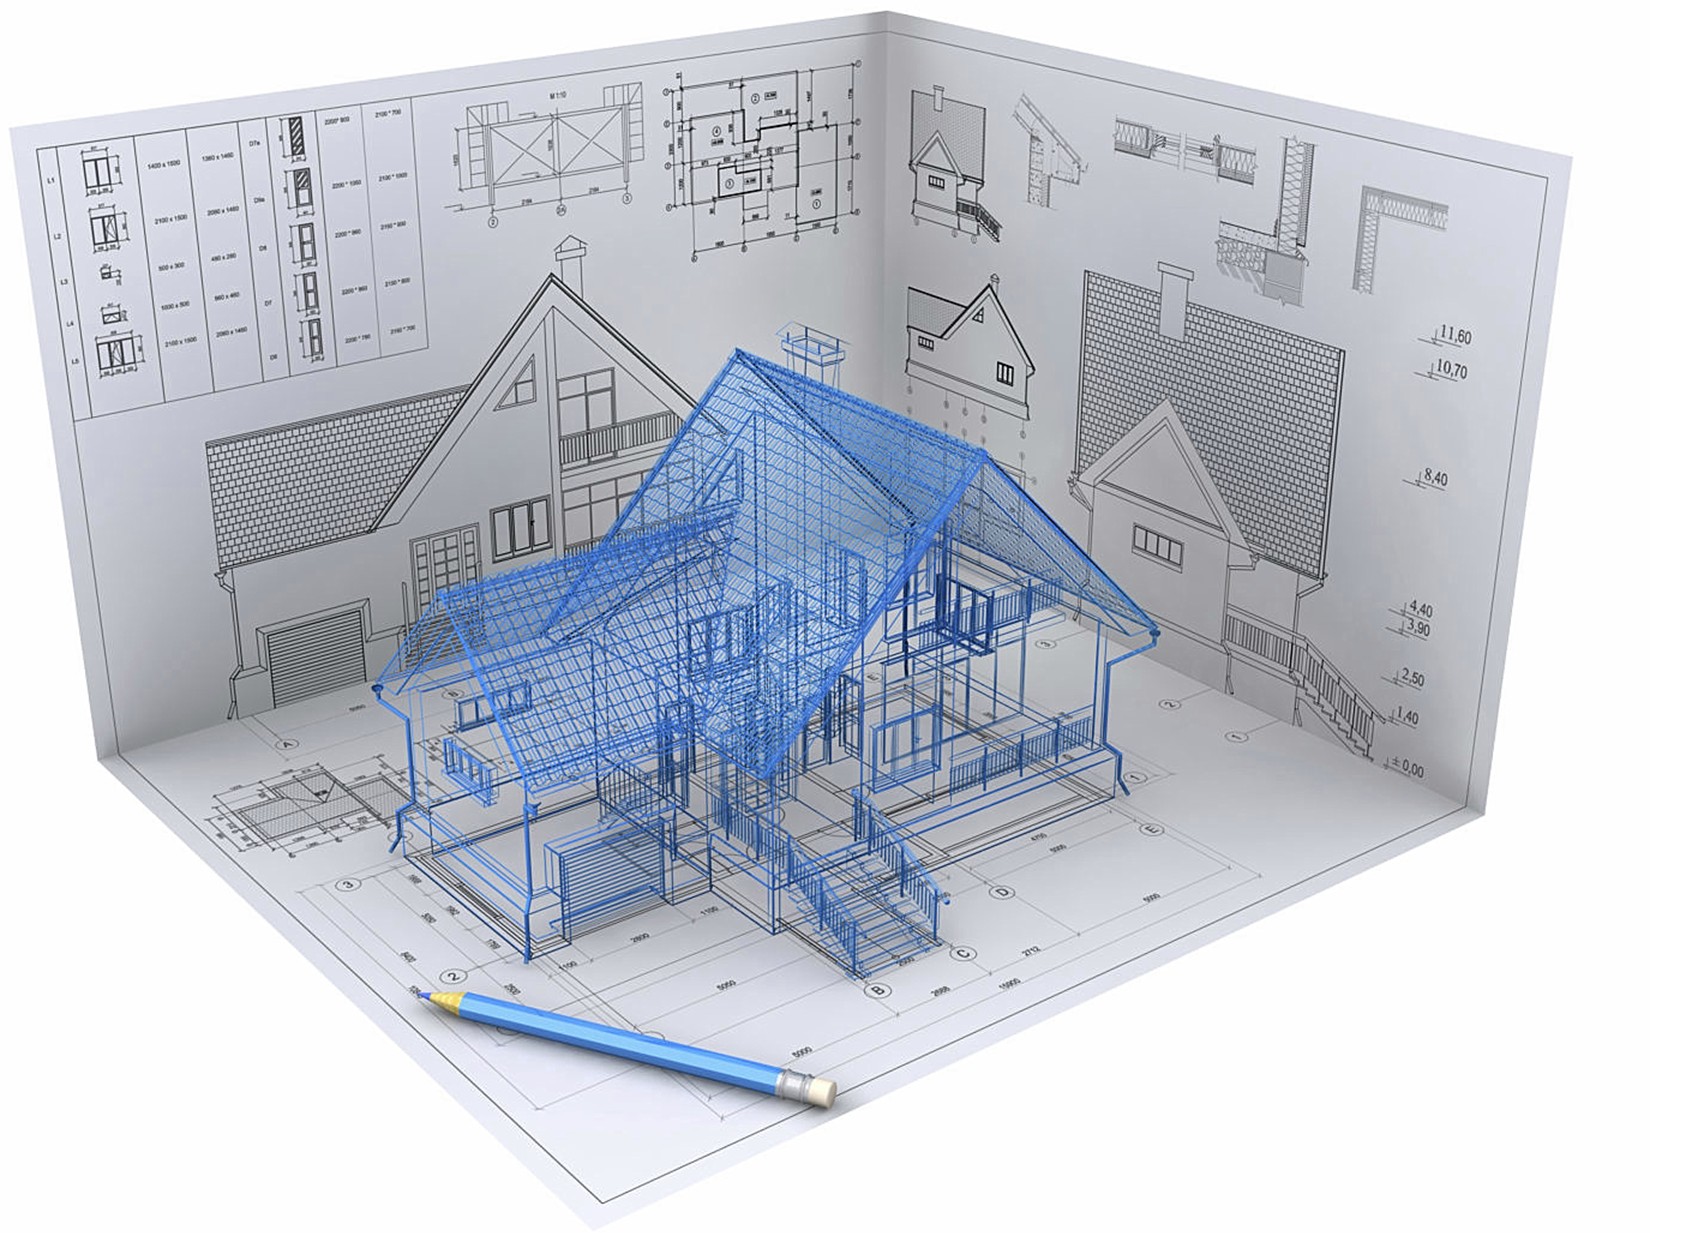 3D House Plan